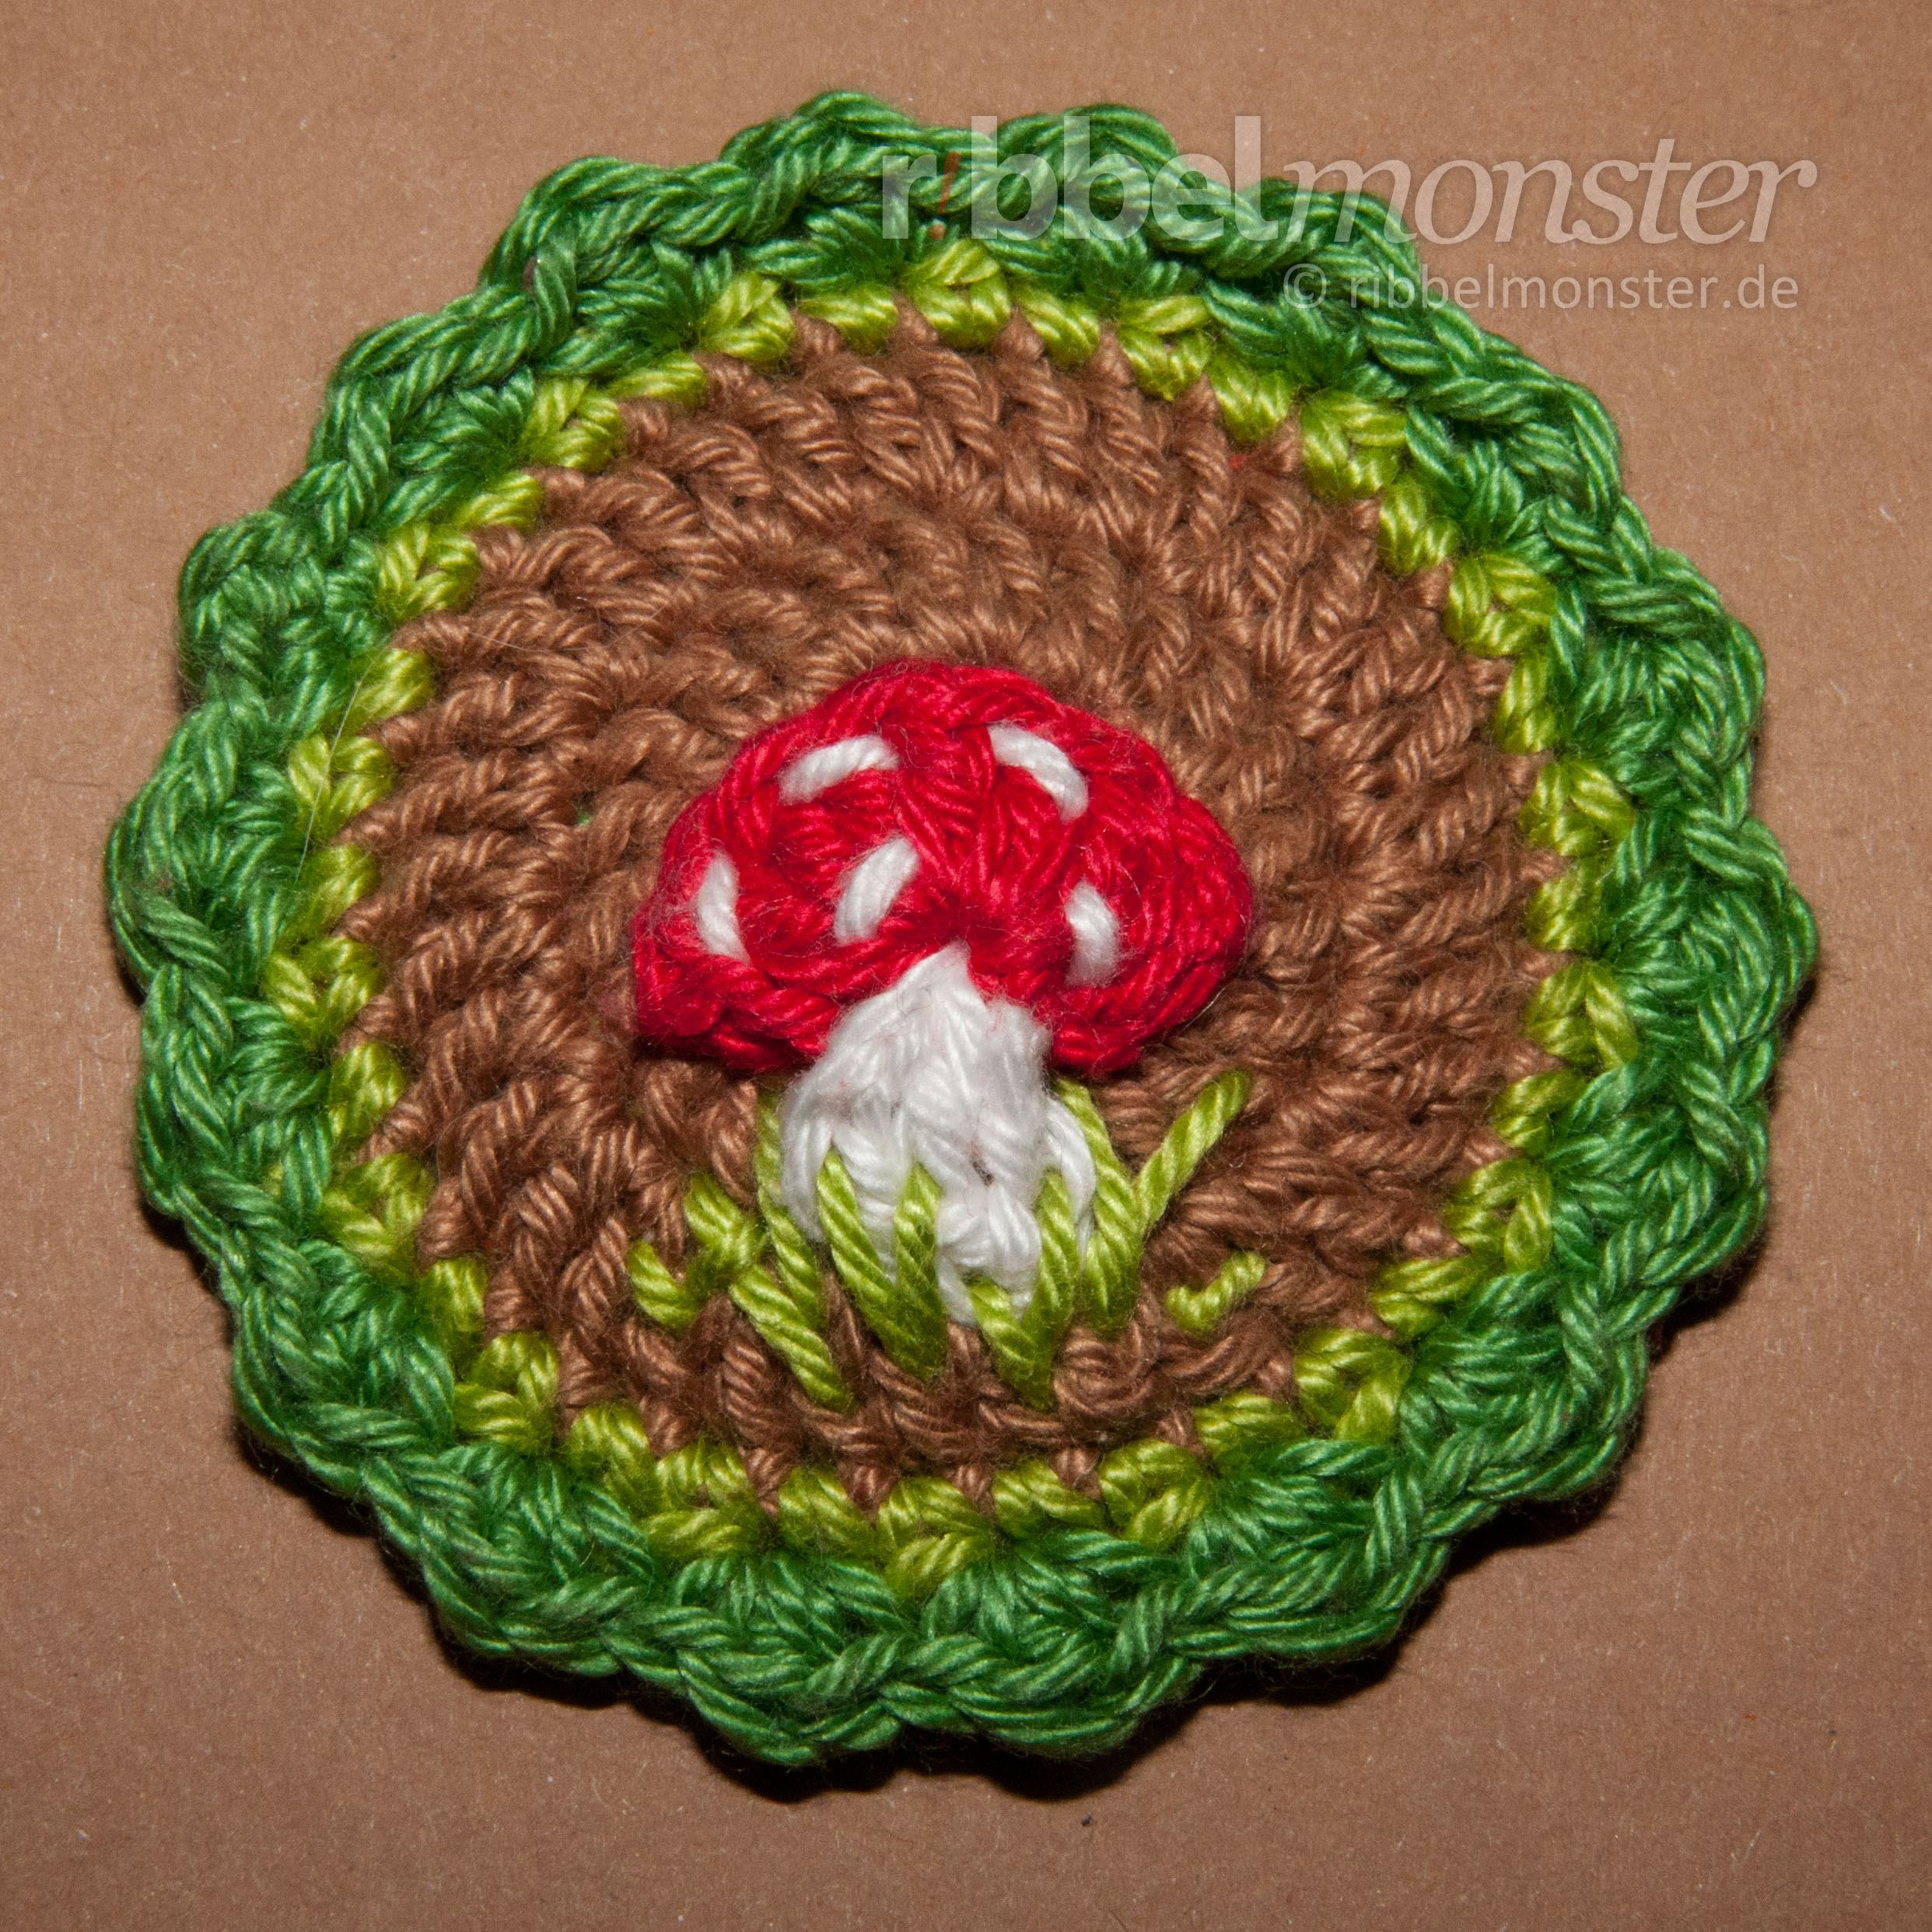 Crochet Button “Toadstool”